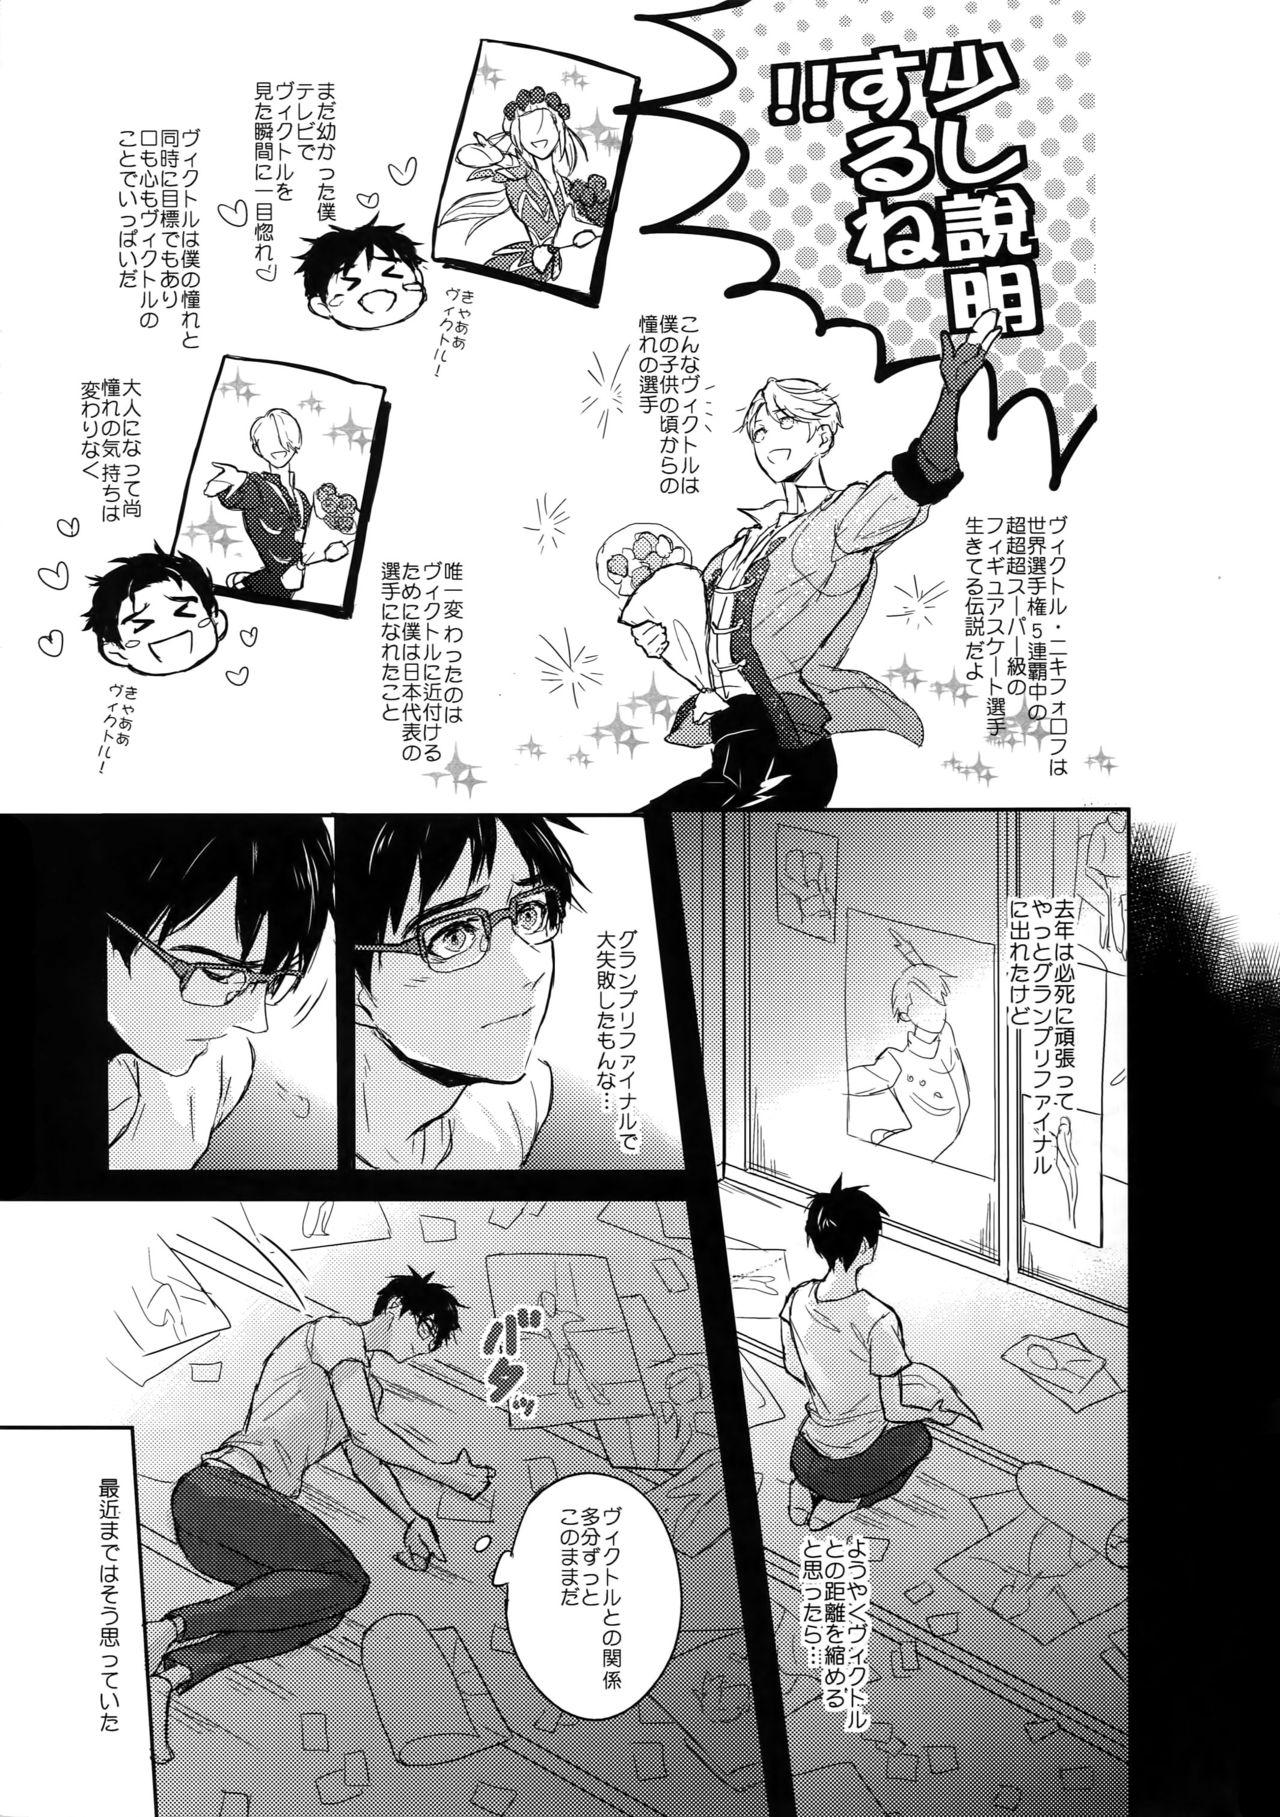 Wam JAPANESE ONSEN AMAZING! - Yuri on ice Bucetuda - Page 4